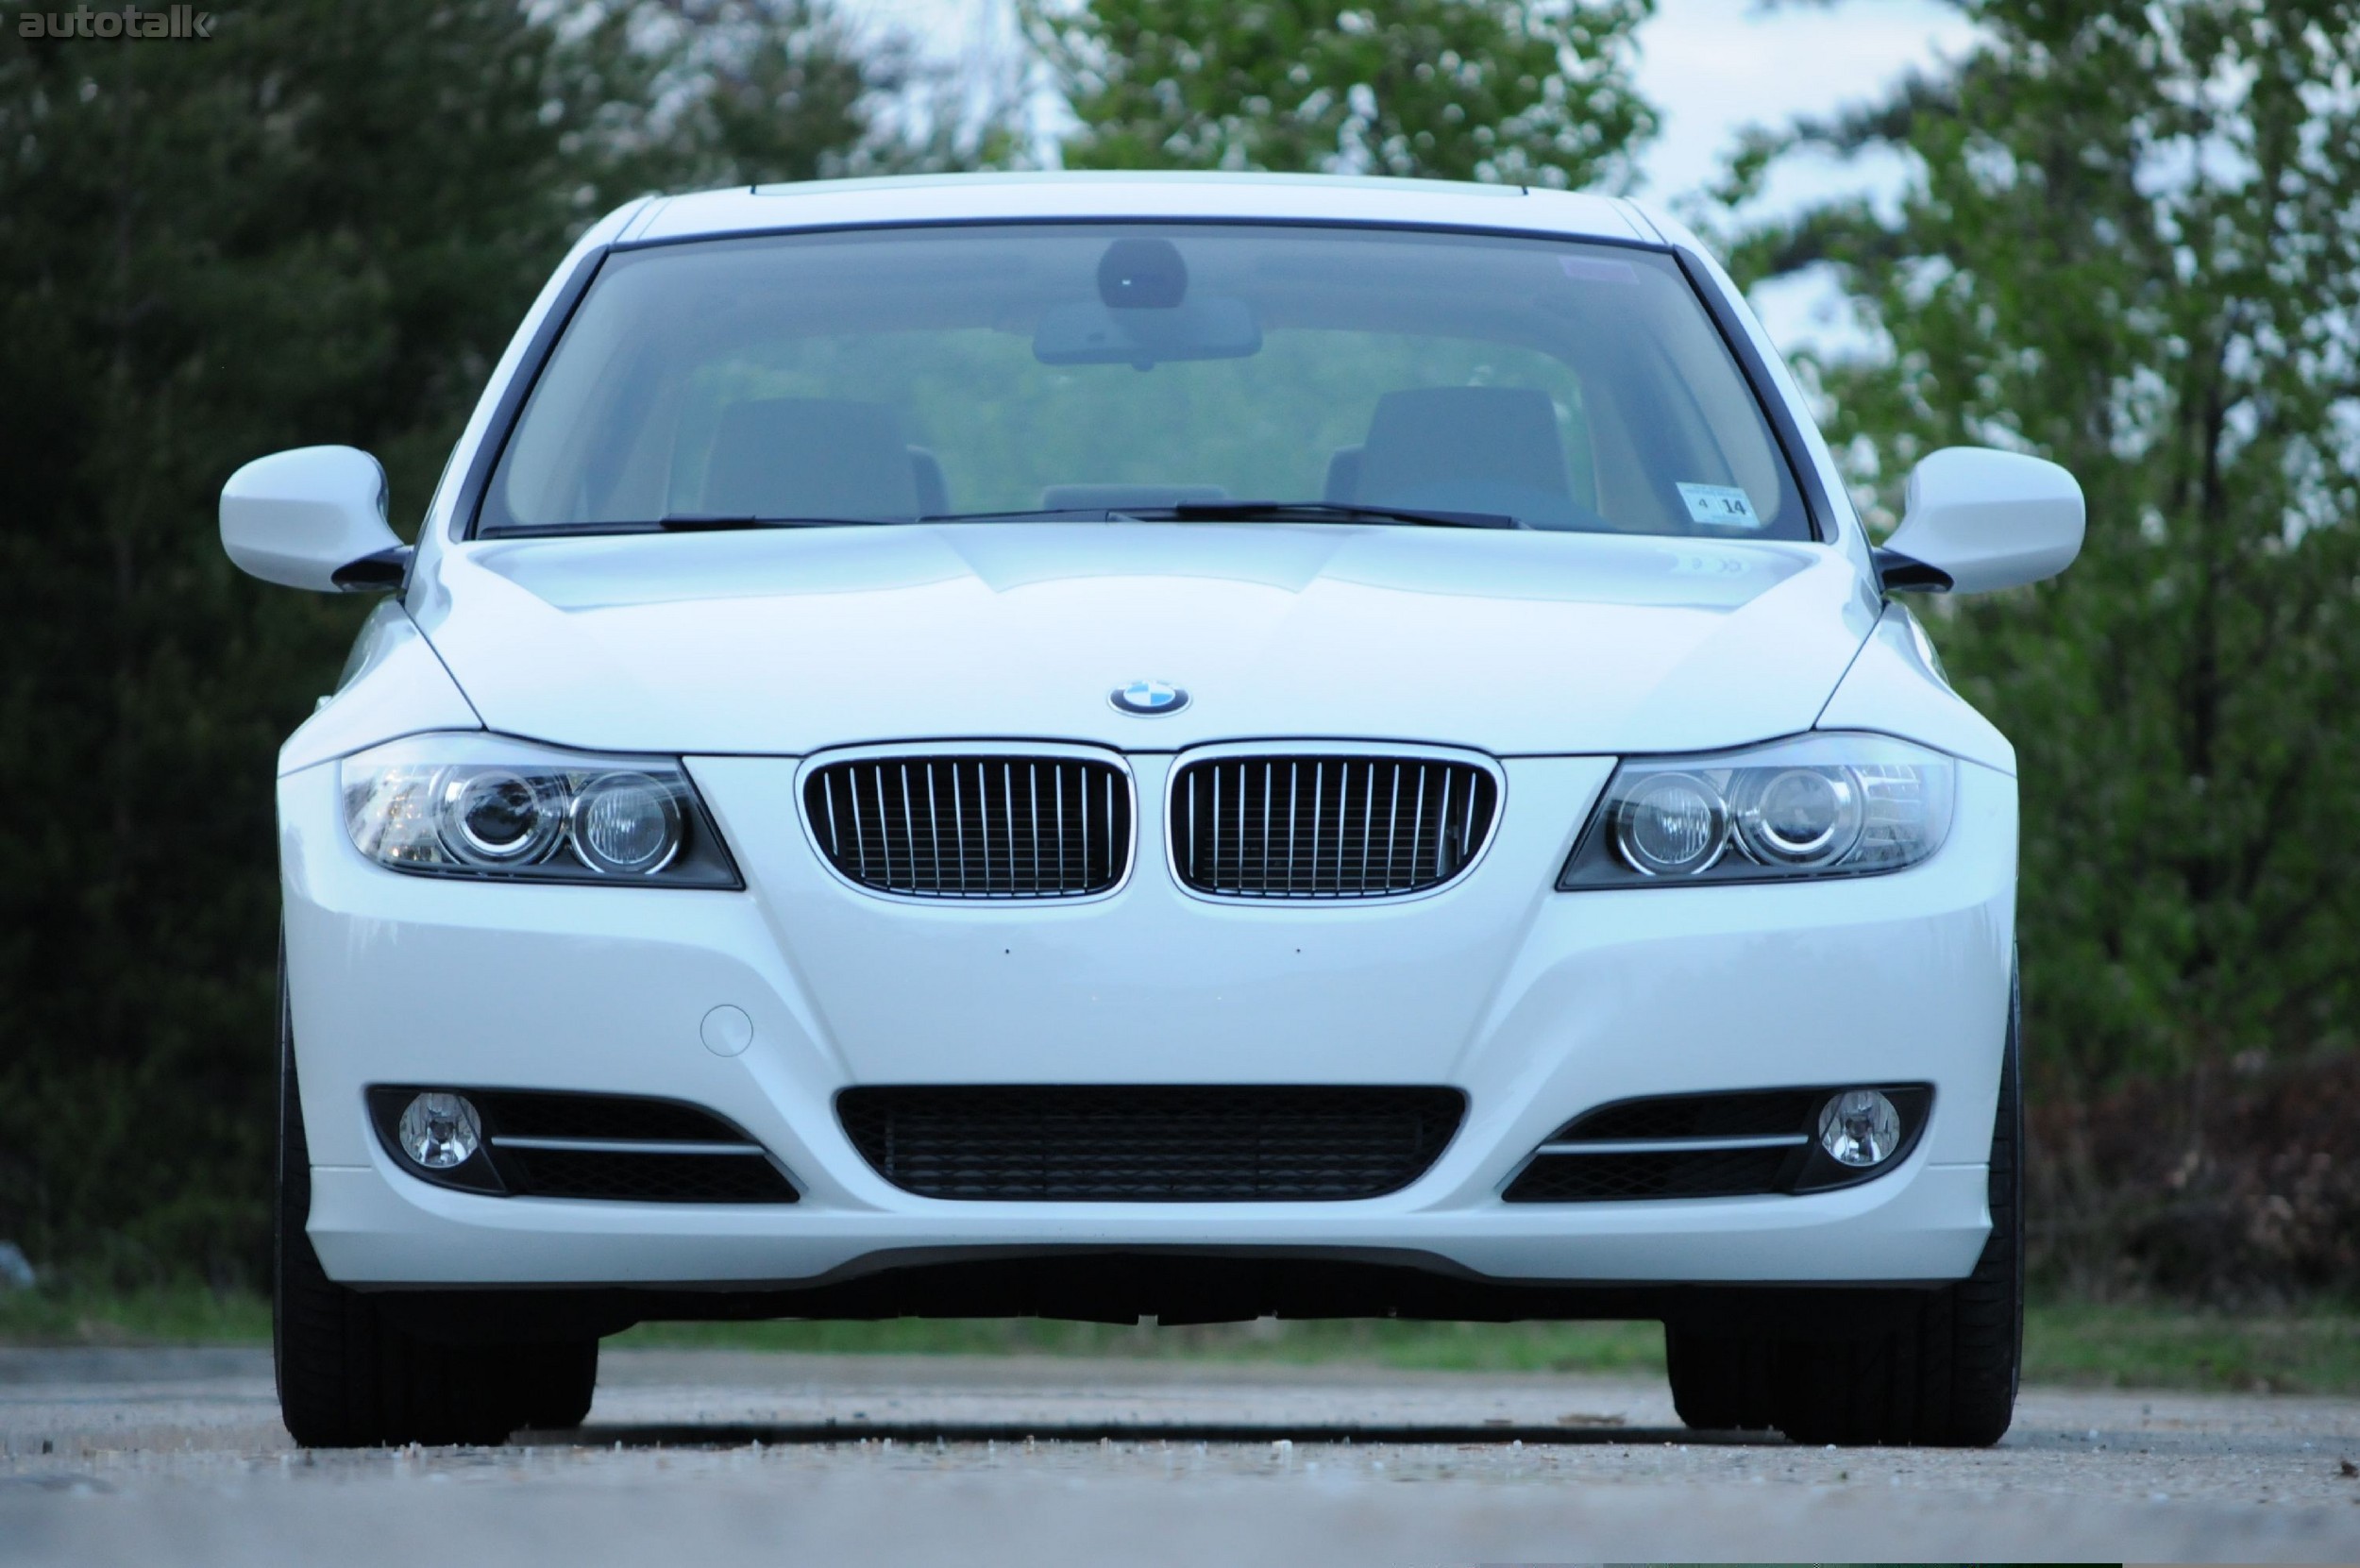 2011 BMW 335i Review